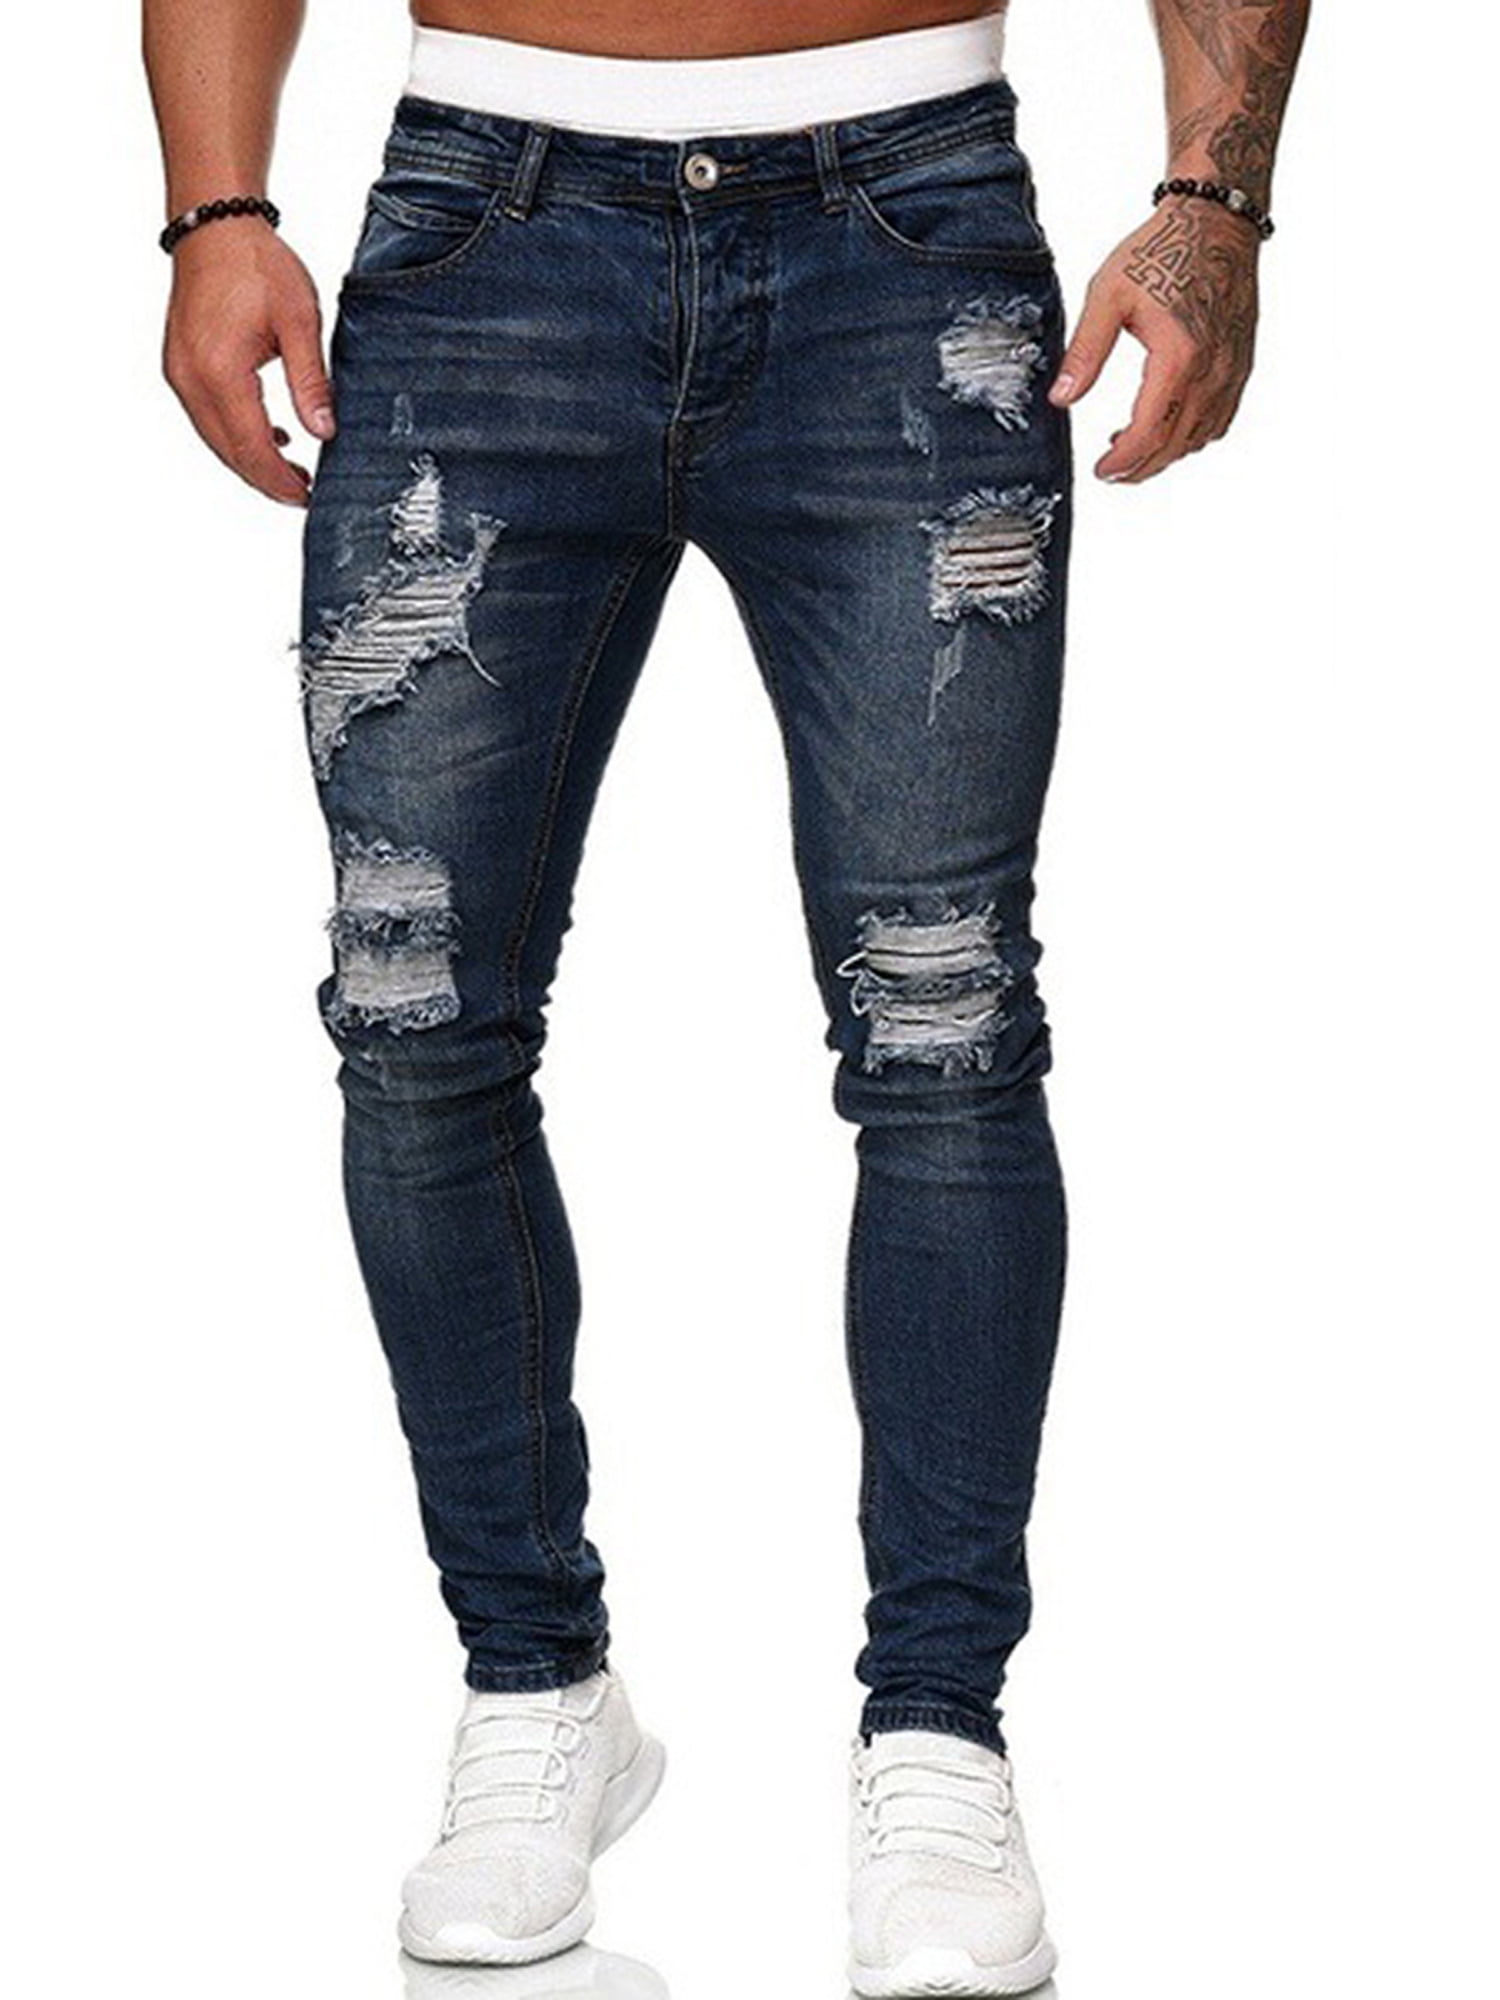 CenturyX Men's Skinny Distressed Jeans Destroyed Knee Holes Slim Tapered Leg Jeans Dark Blue L - Walmart.com